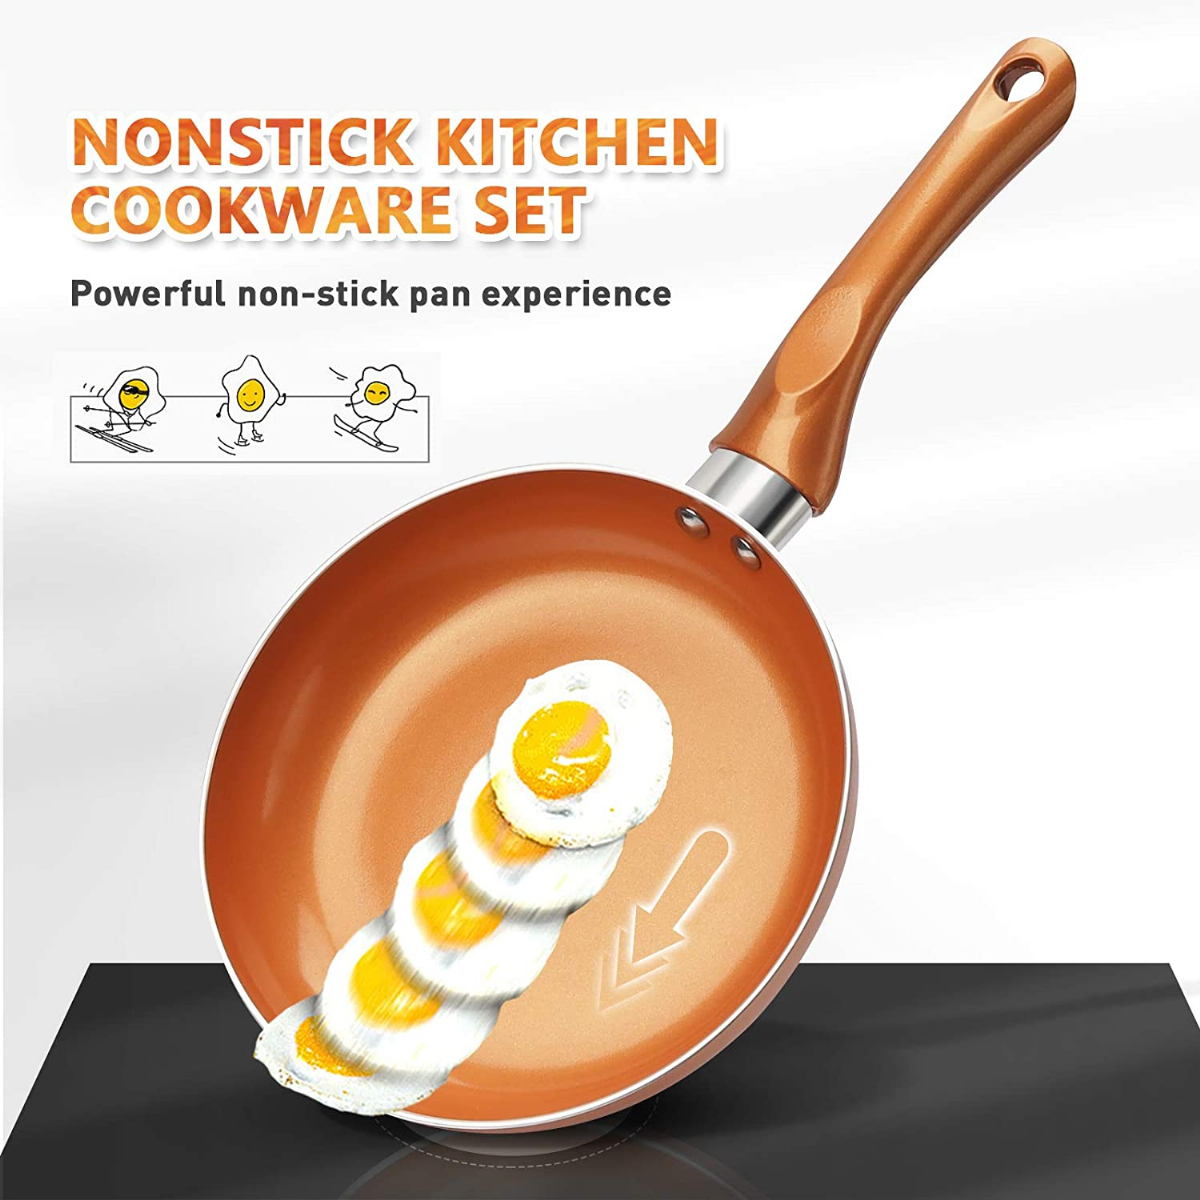 FRUITEAM 10pcs Cookware Set Ceramic Nonstick Soup Pot/Milk Pot/Frying Pans  Set